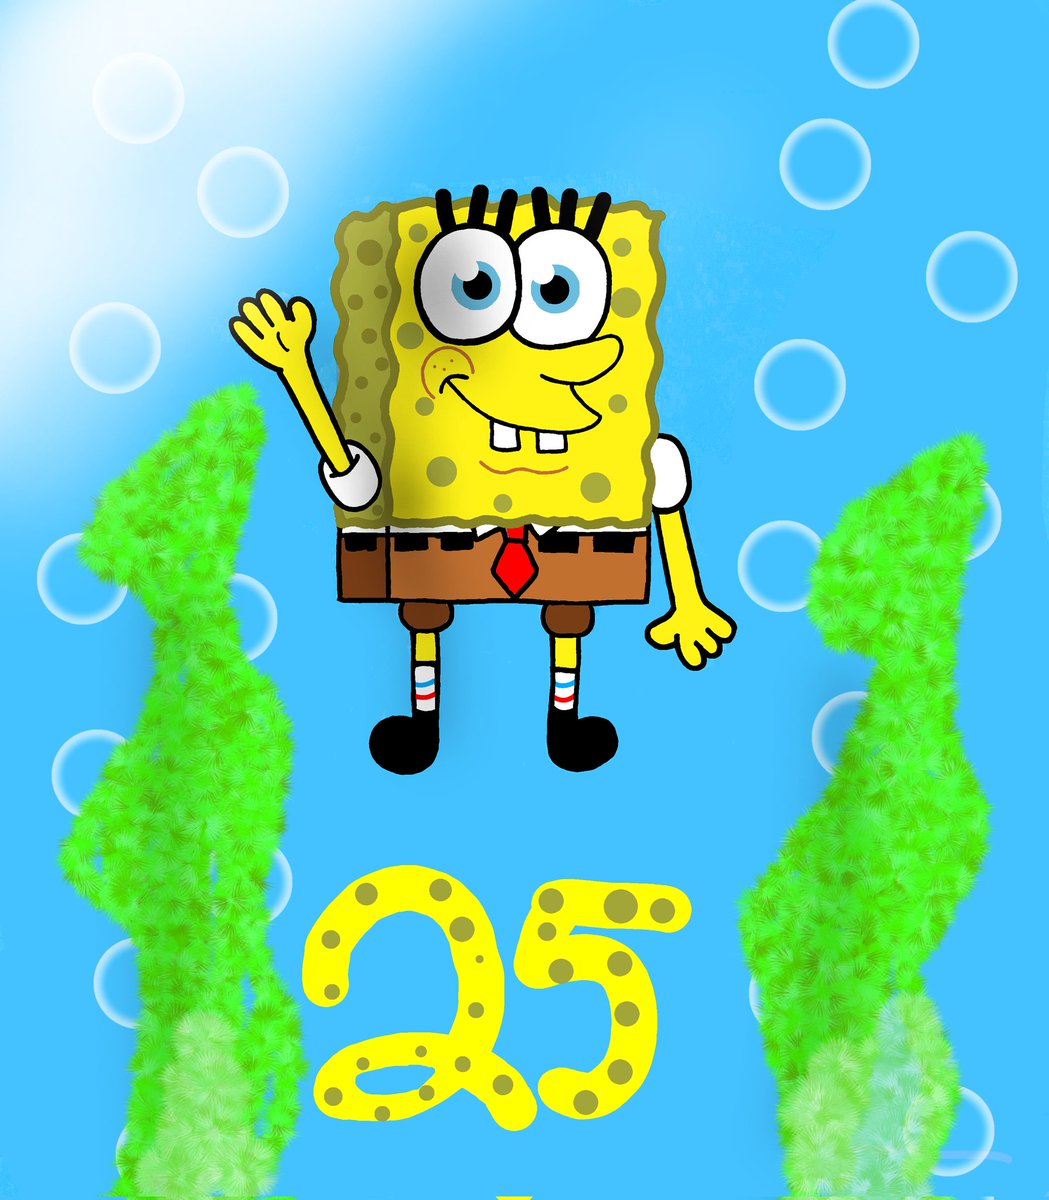 Happy 25 years to SpongeBob SquarePants!!! 🧽🫧

#SpongeBobSquarePants #Spongebob25 #ArtistOnTwitter